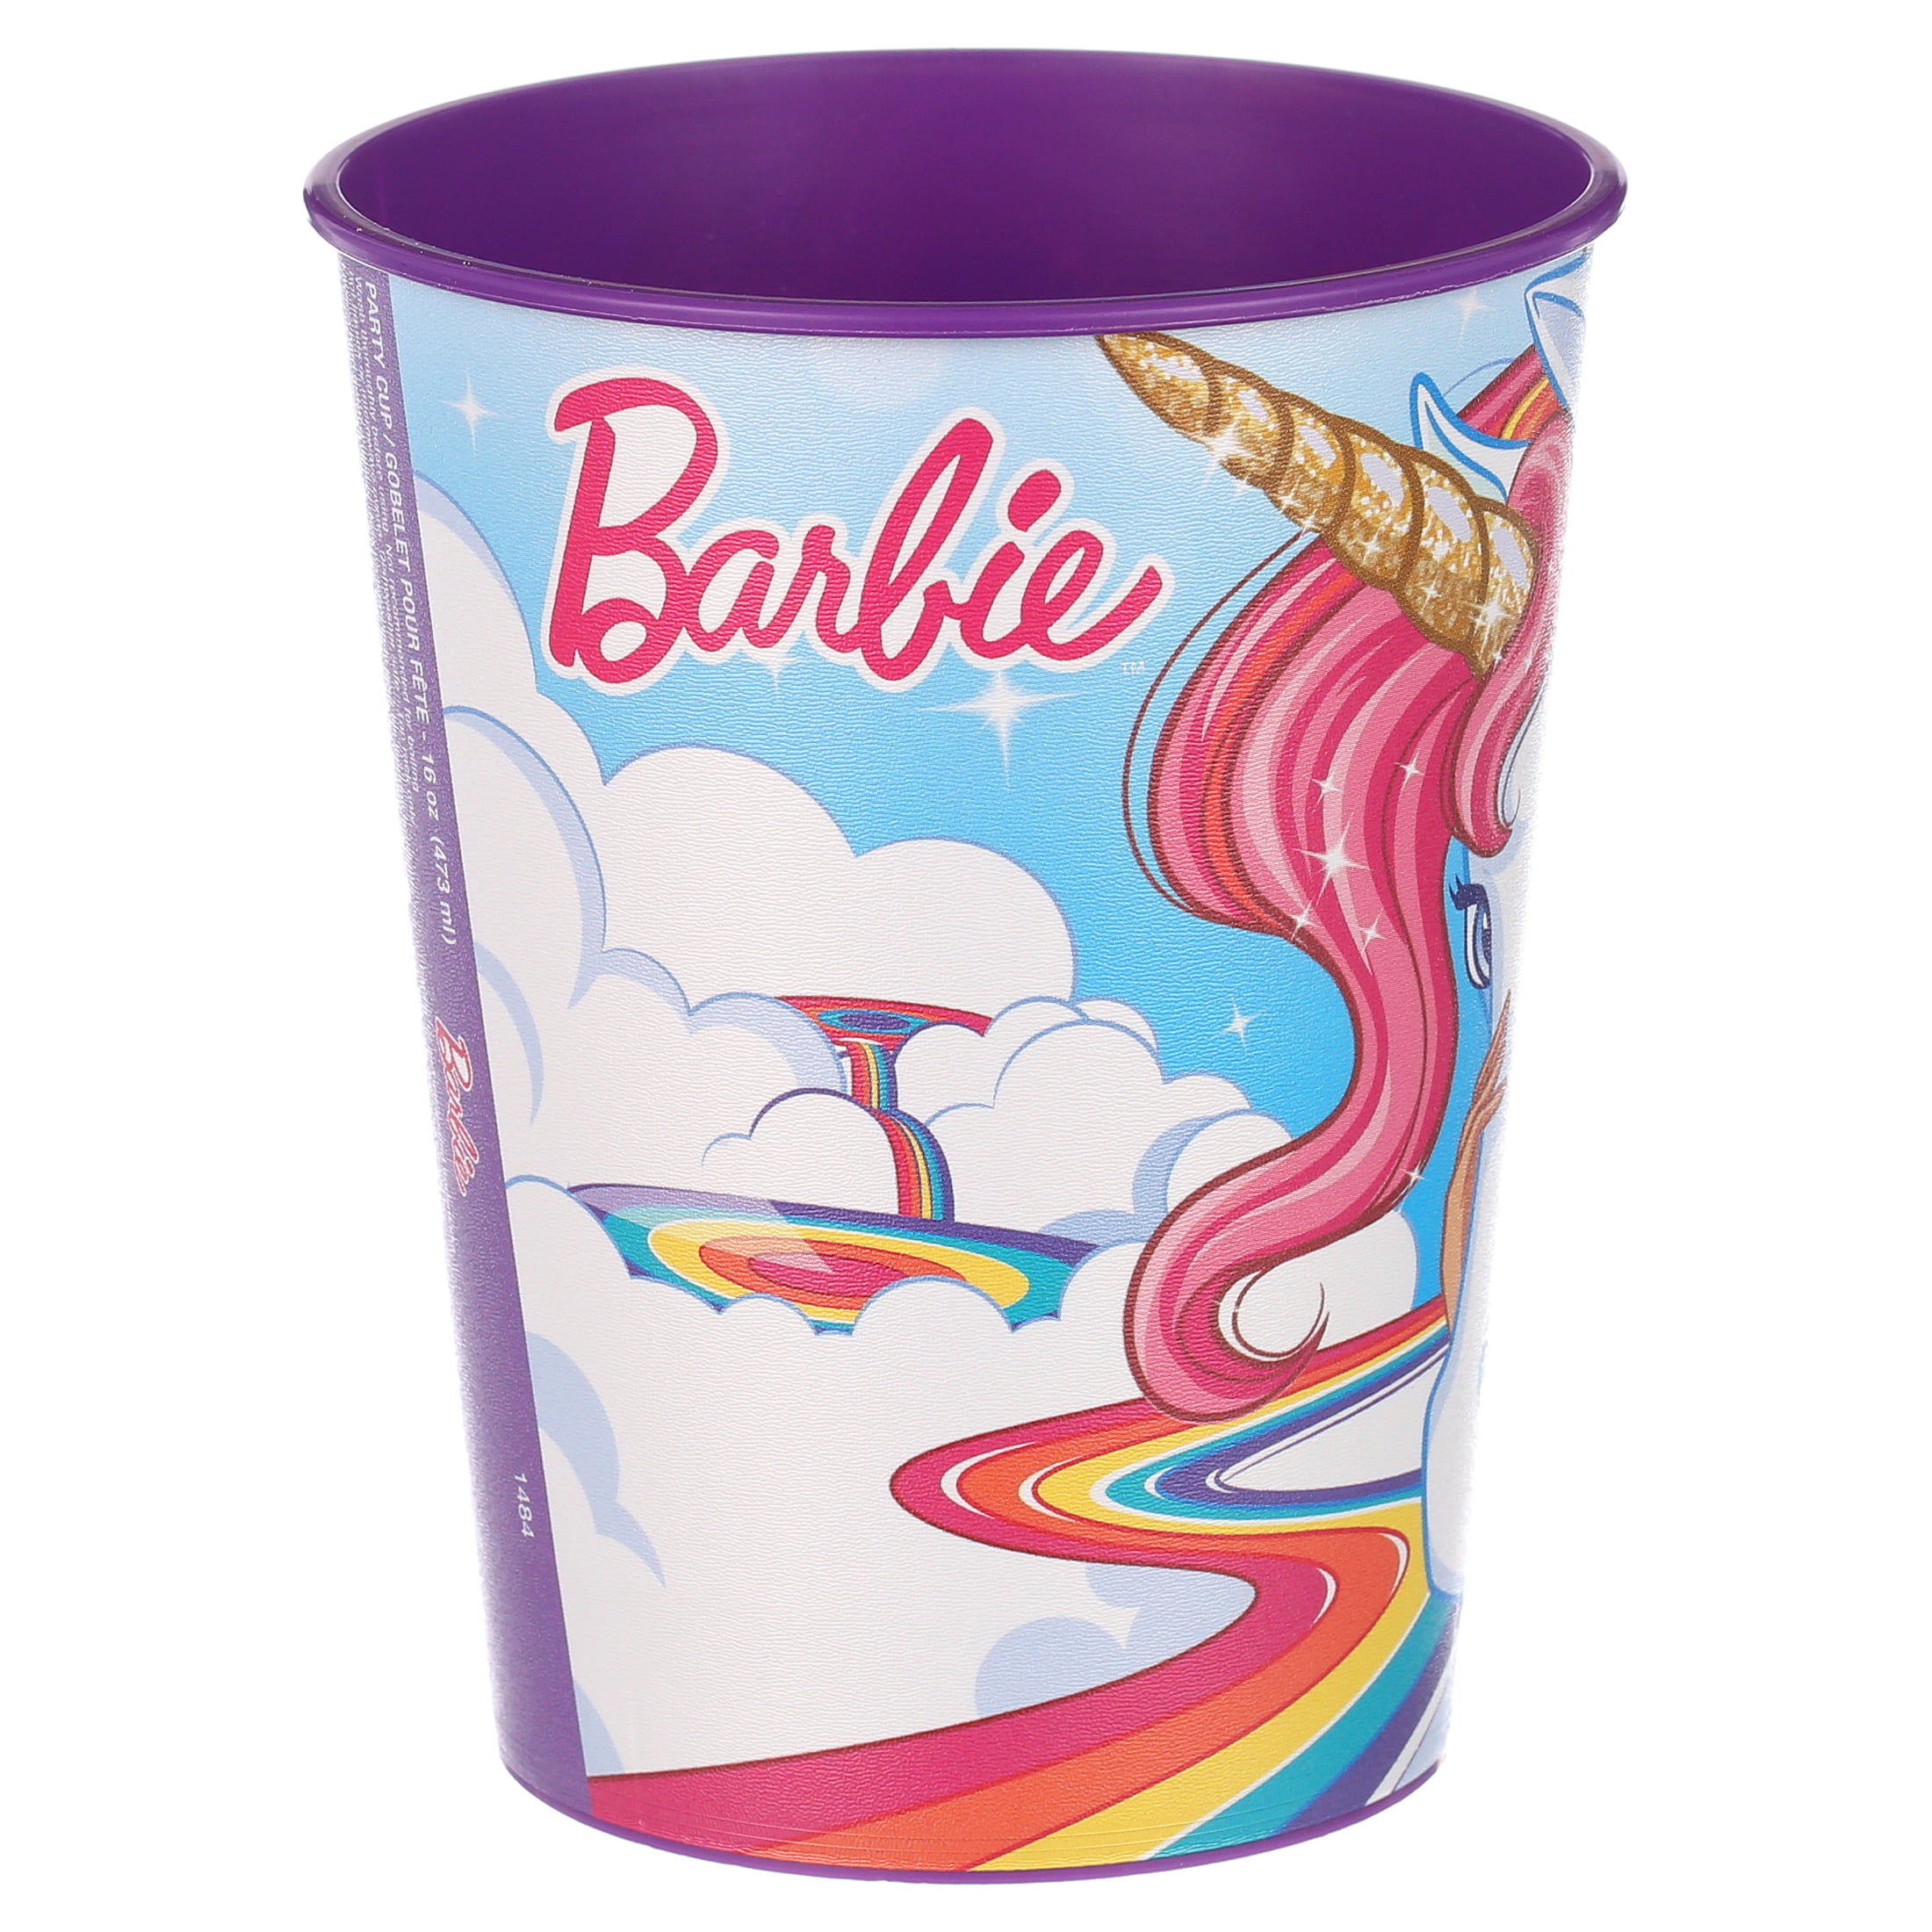 Let's Go Party Barbie Pink Sprinkle Mix, 4 oz Jar (NET Vol. 1/2 Cup)